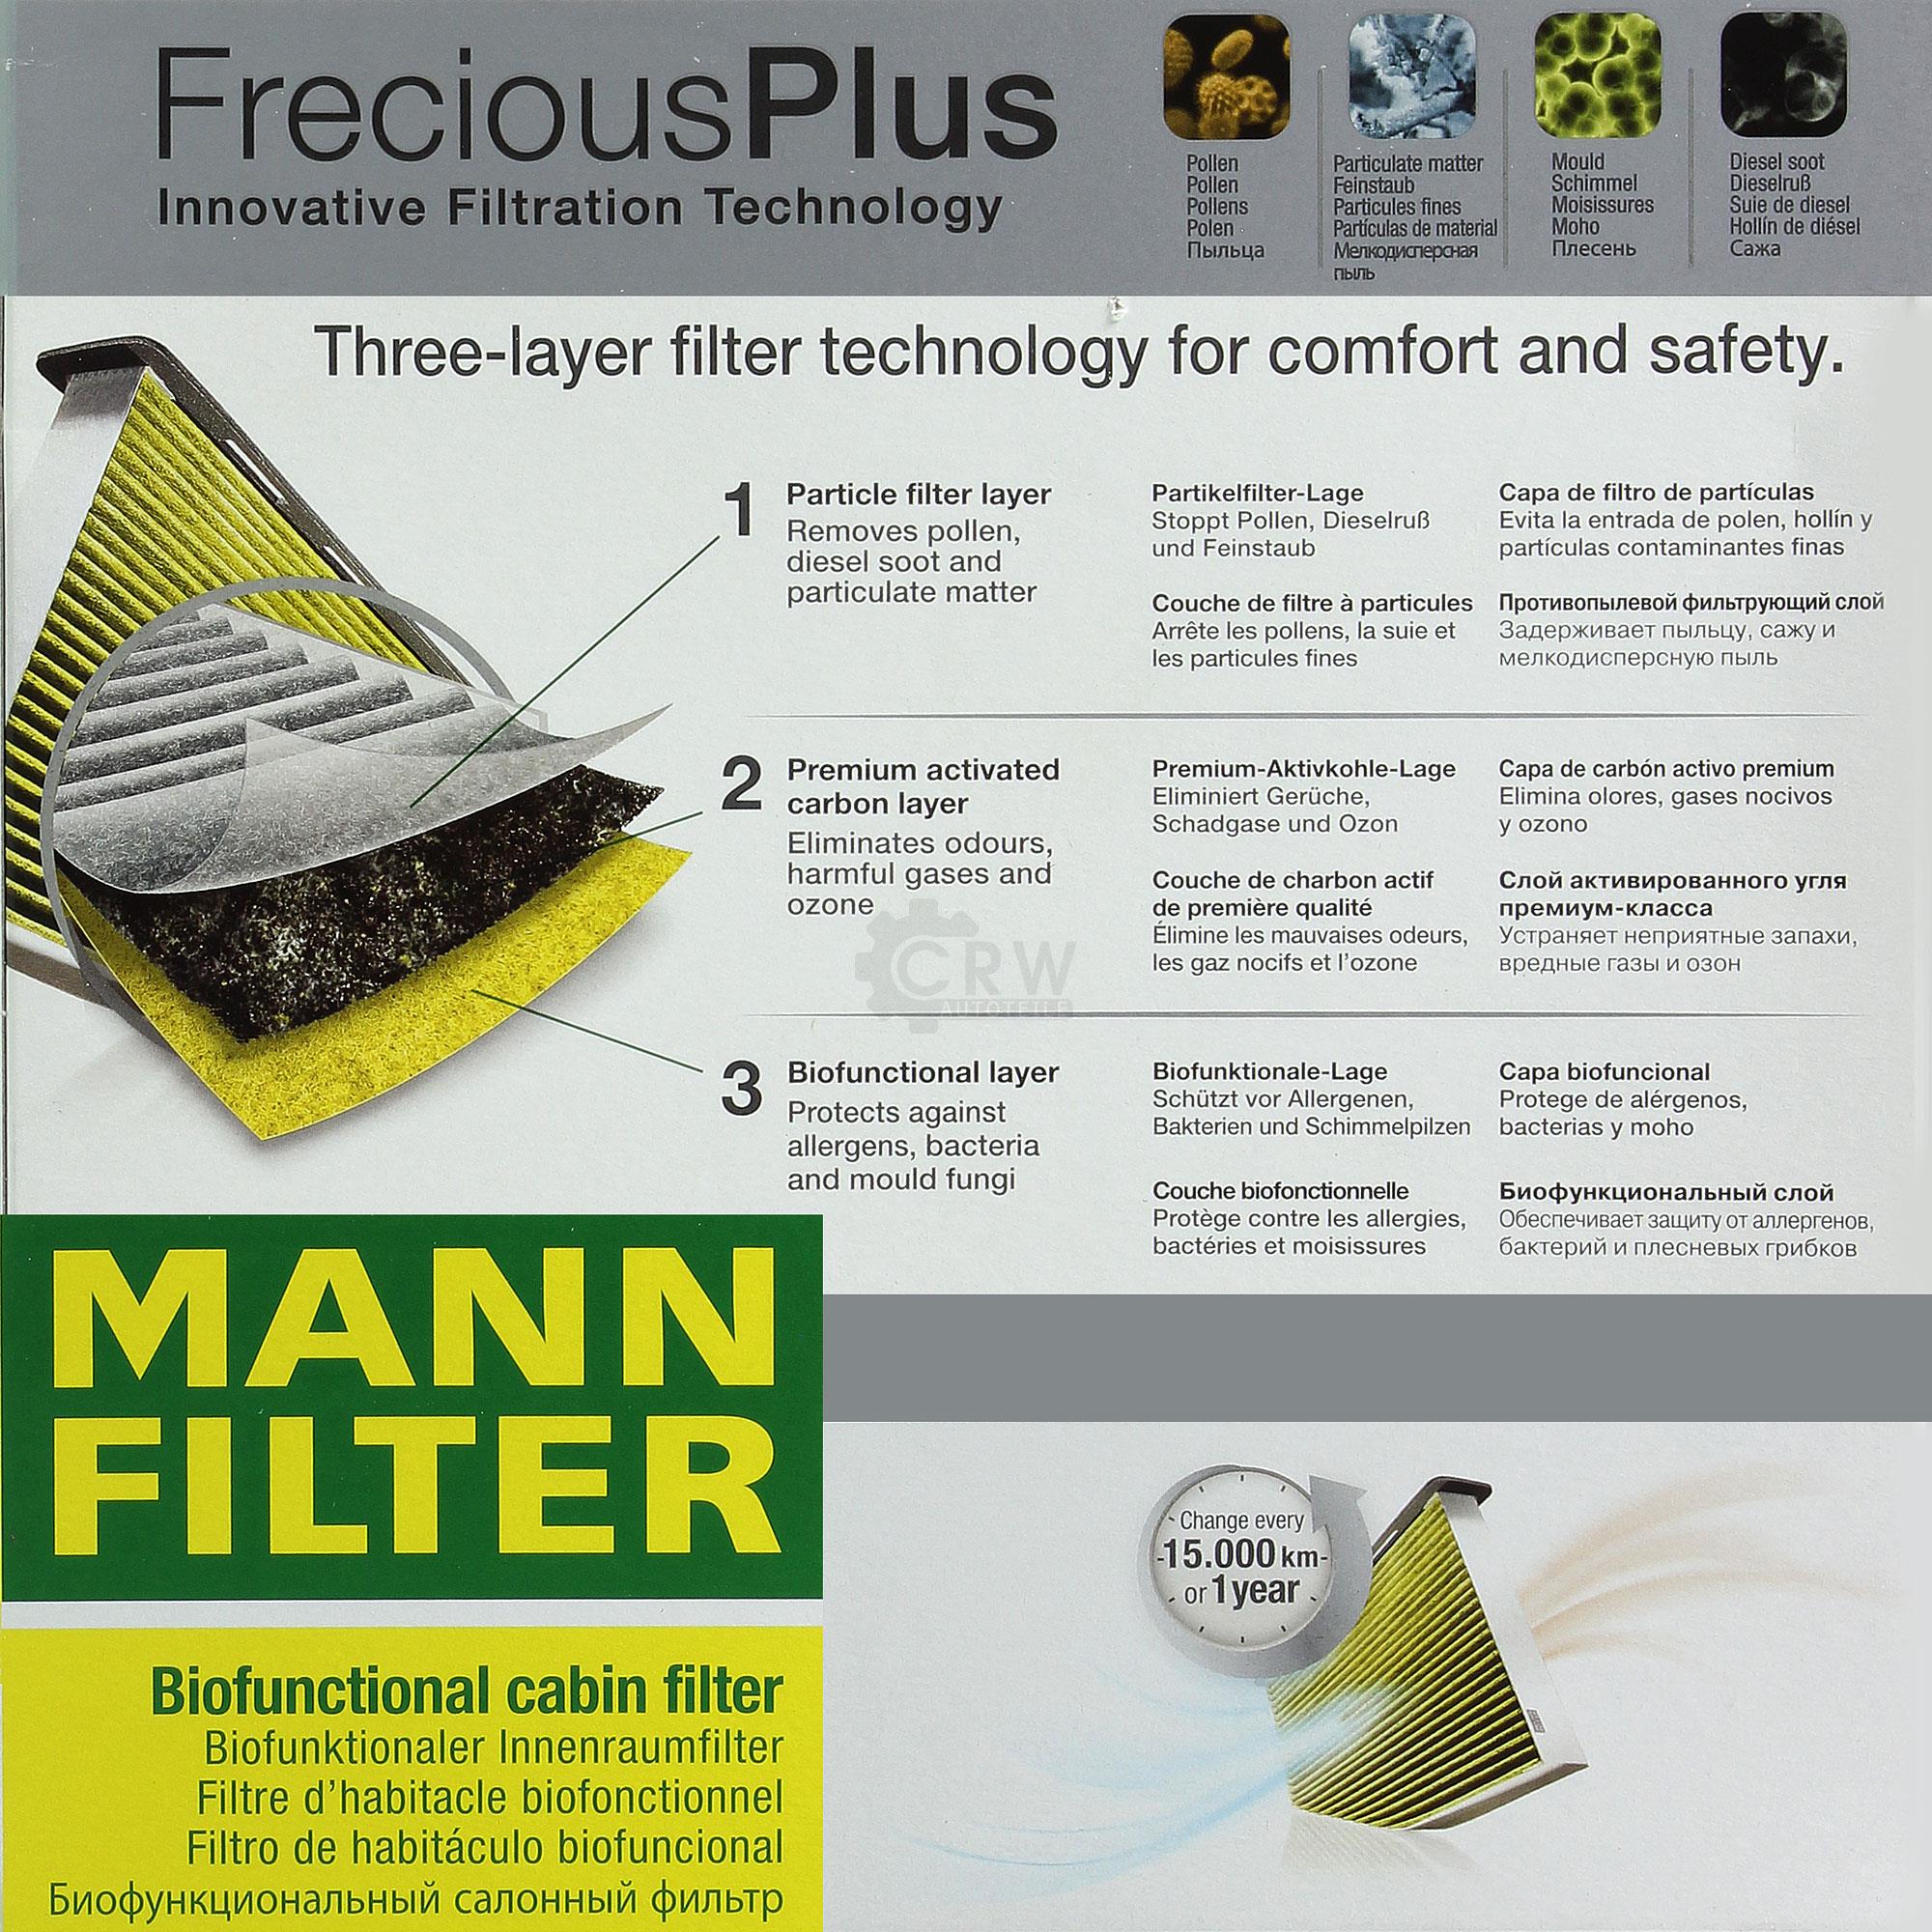 MANN-Filter Innenraumfilter Biofunctional für Allergiker FP 3337